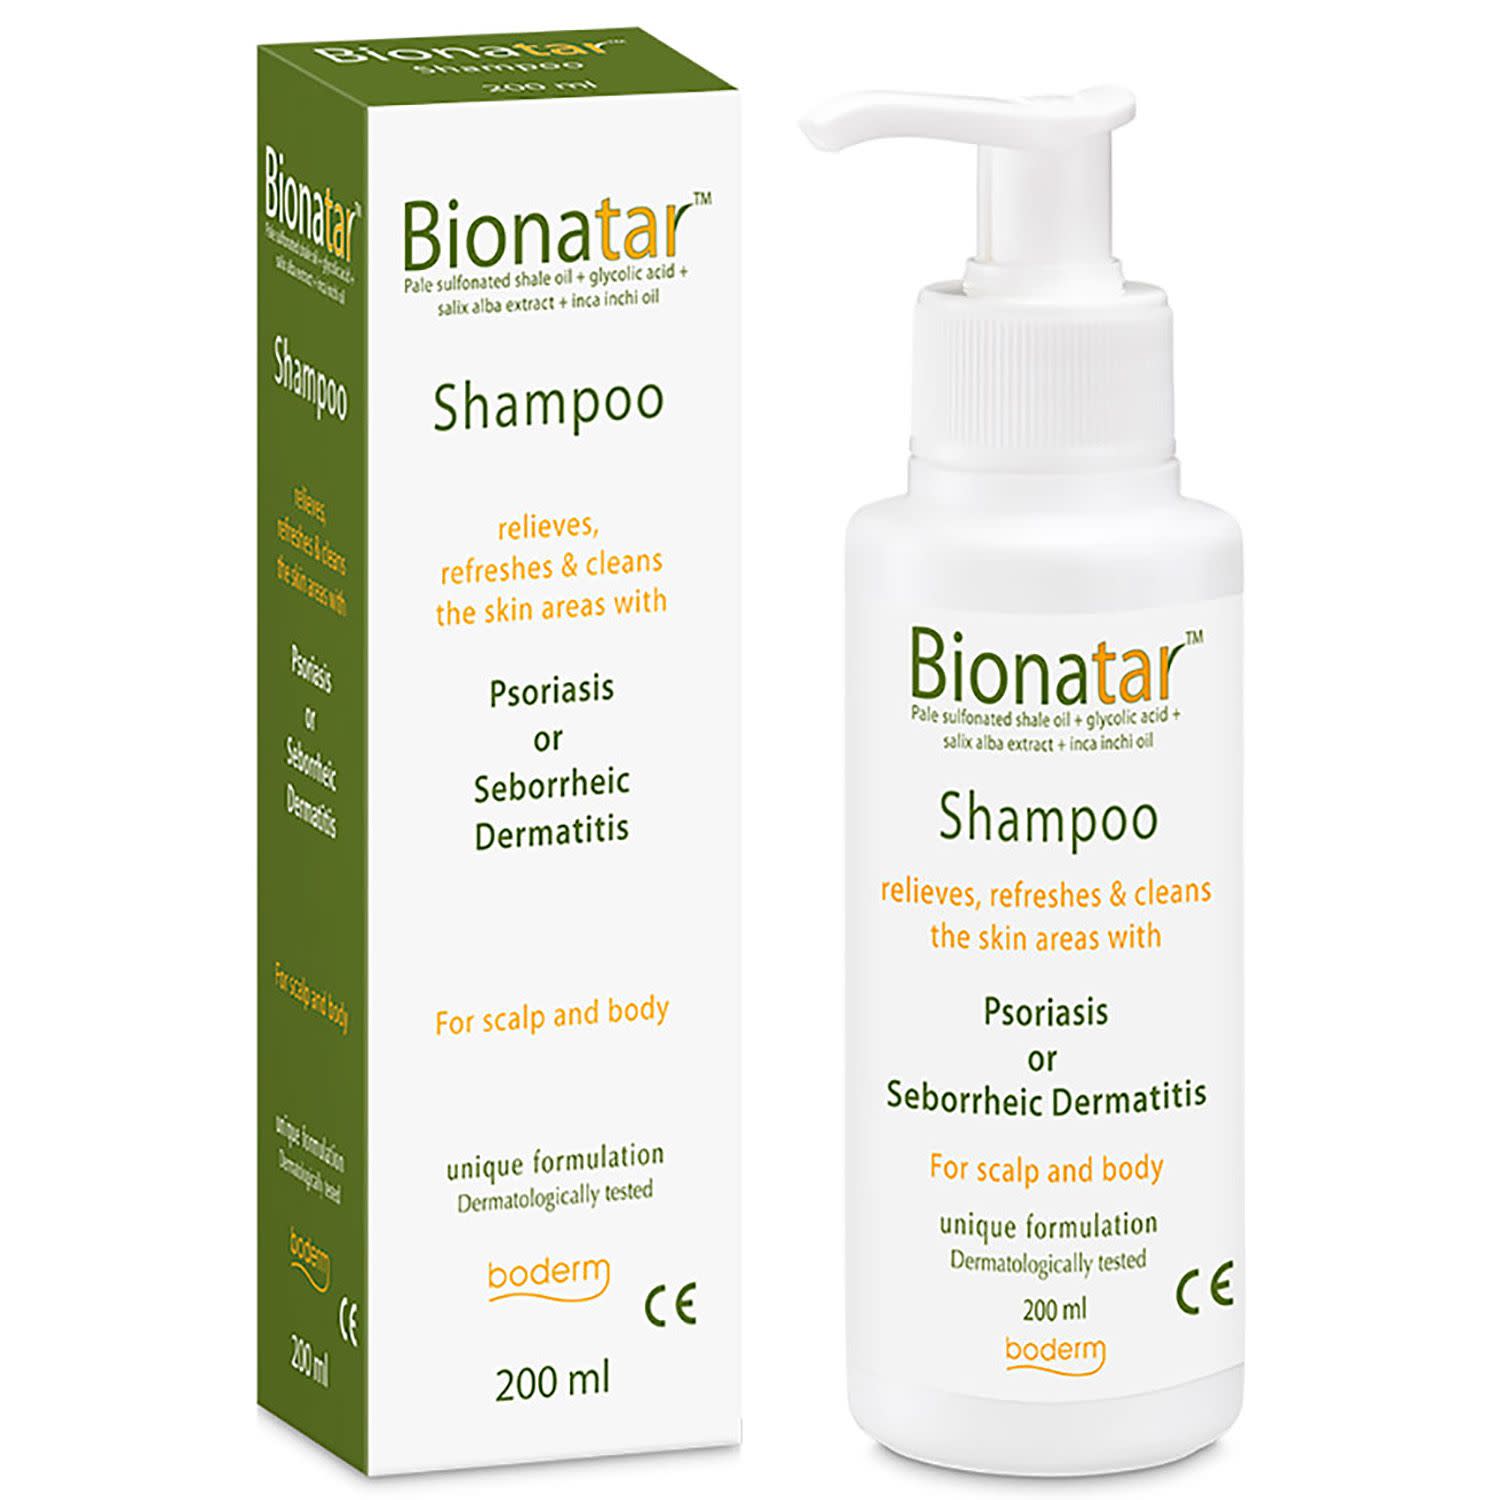 926830213 - Bionatar Shampoo Scalp and Body 200ml - 4721116_2.jpg